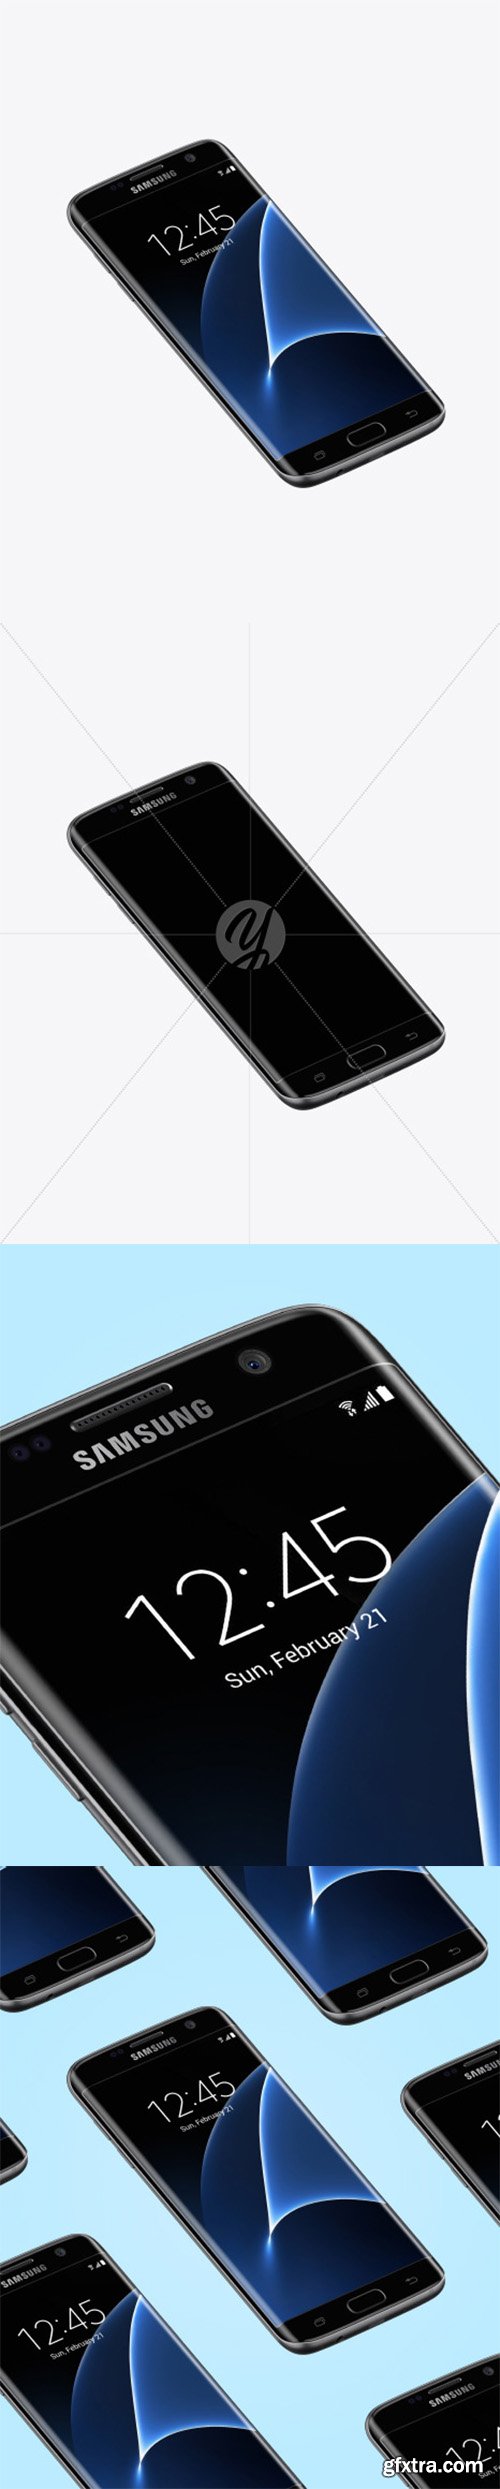 Black Onyx Samsung Galaxy S7 Phone Mockup 52216